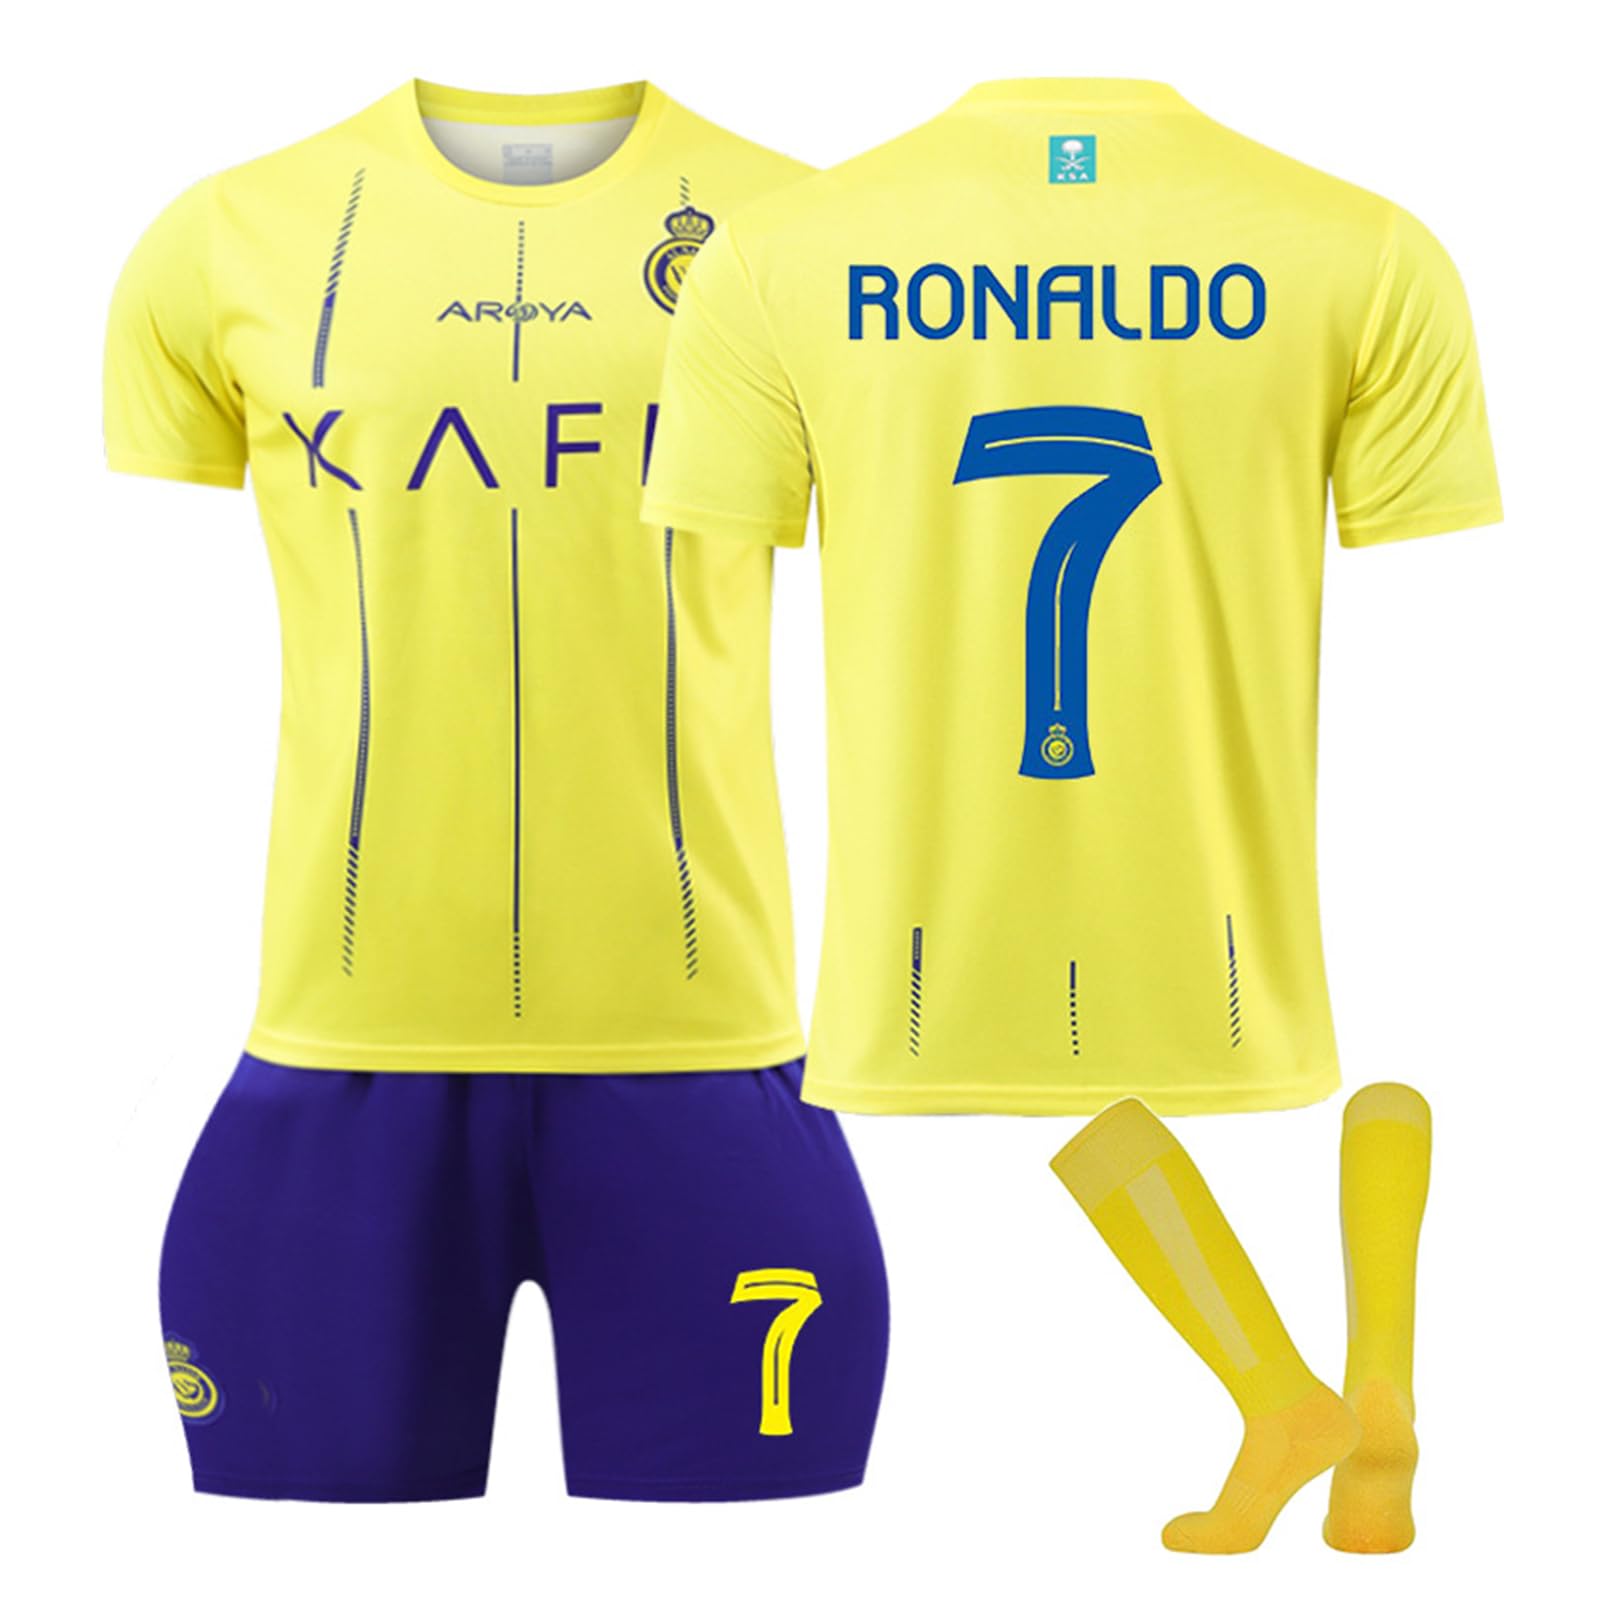 HI-FINE Kids Soccer Jersey,Ronaldo Jersey Shirts,Boys Soccer Jersey Set,Soccer clothing,Sport Gift Set for Youth